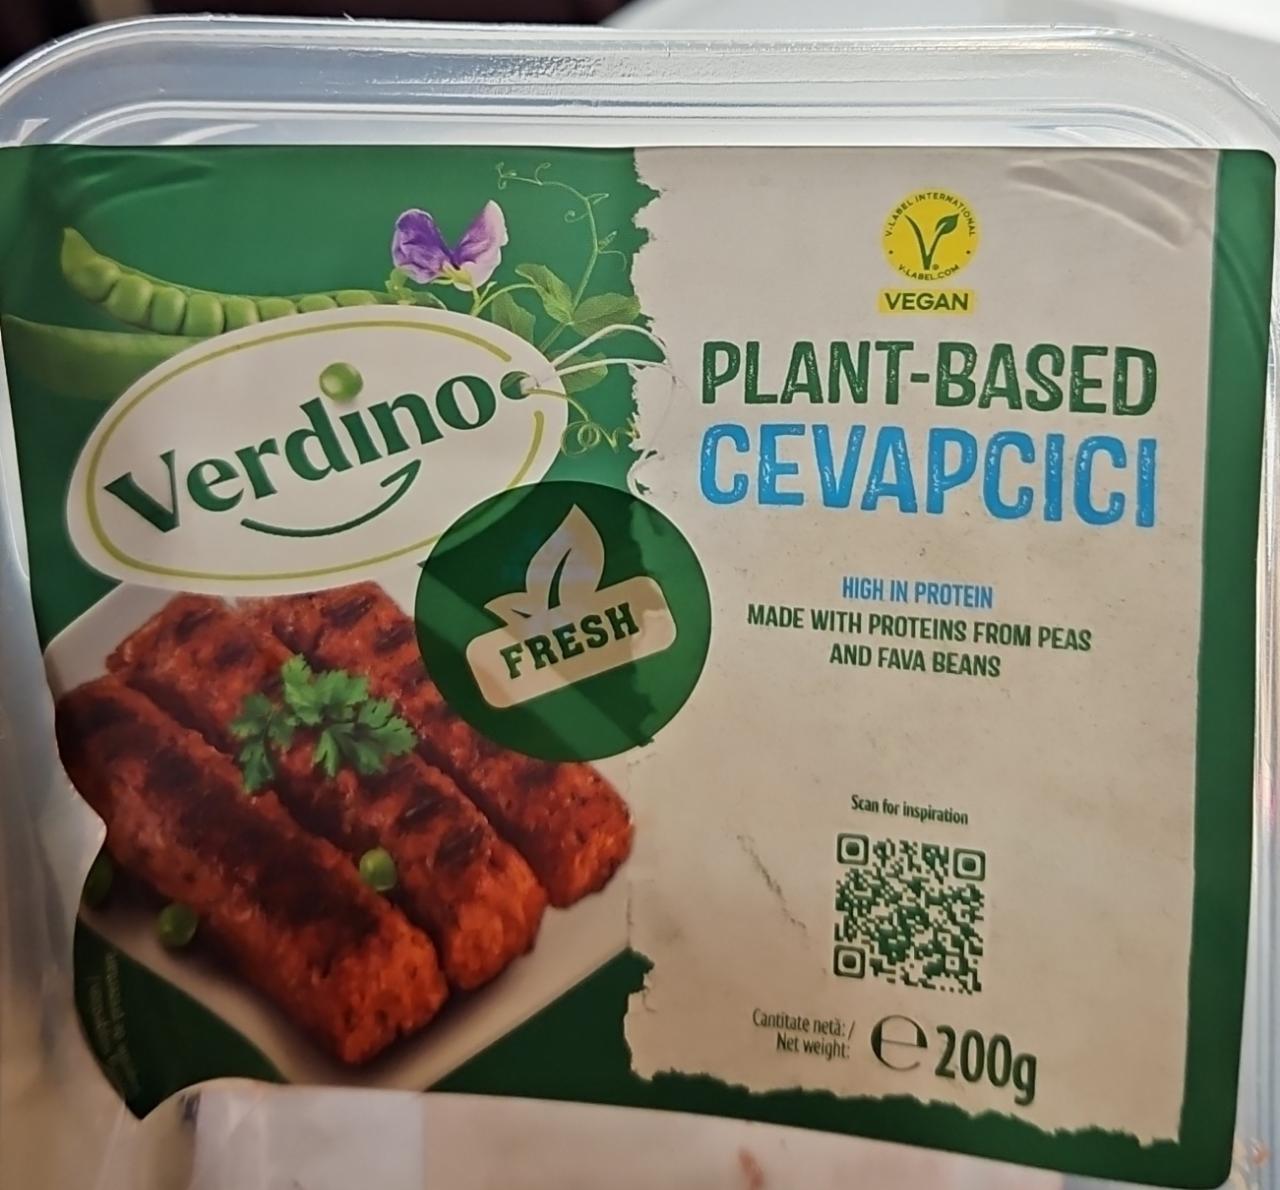 Képek - Plant based cevapcici Verdino